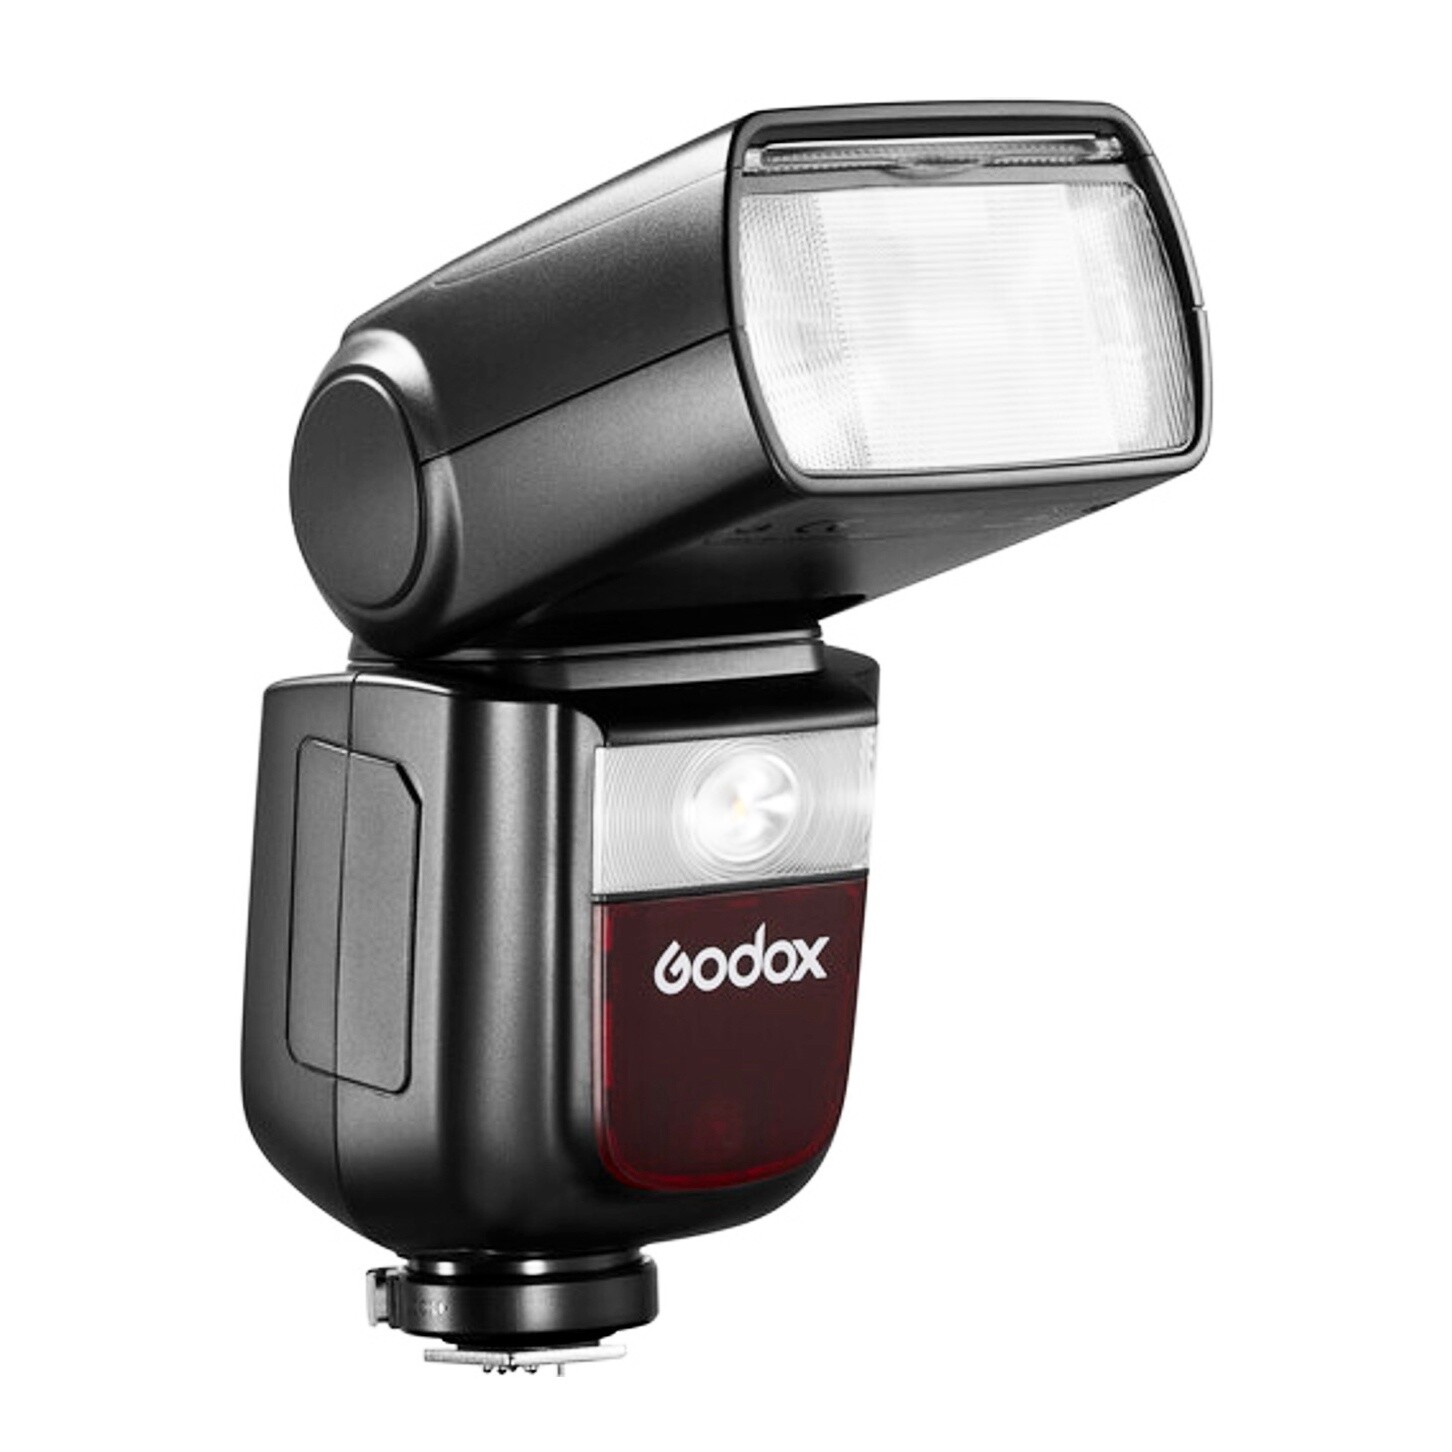 Godox V860III On-Camera Flash (for Sony)